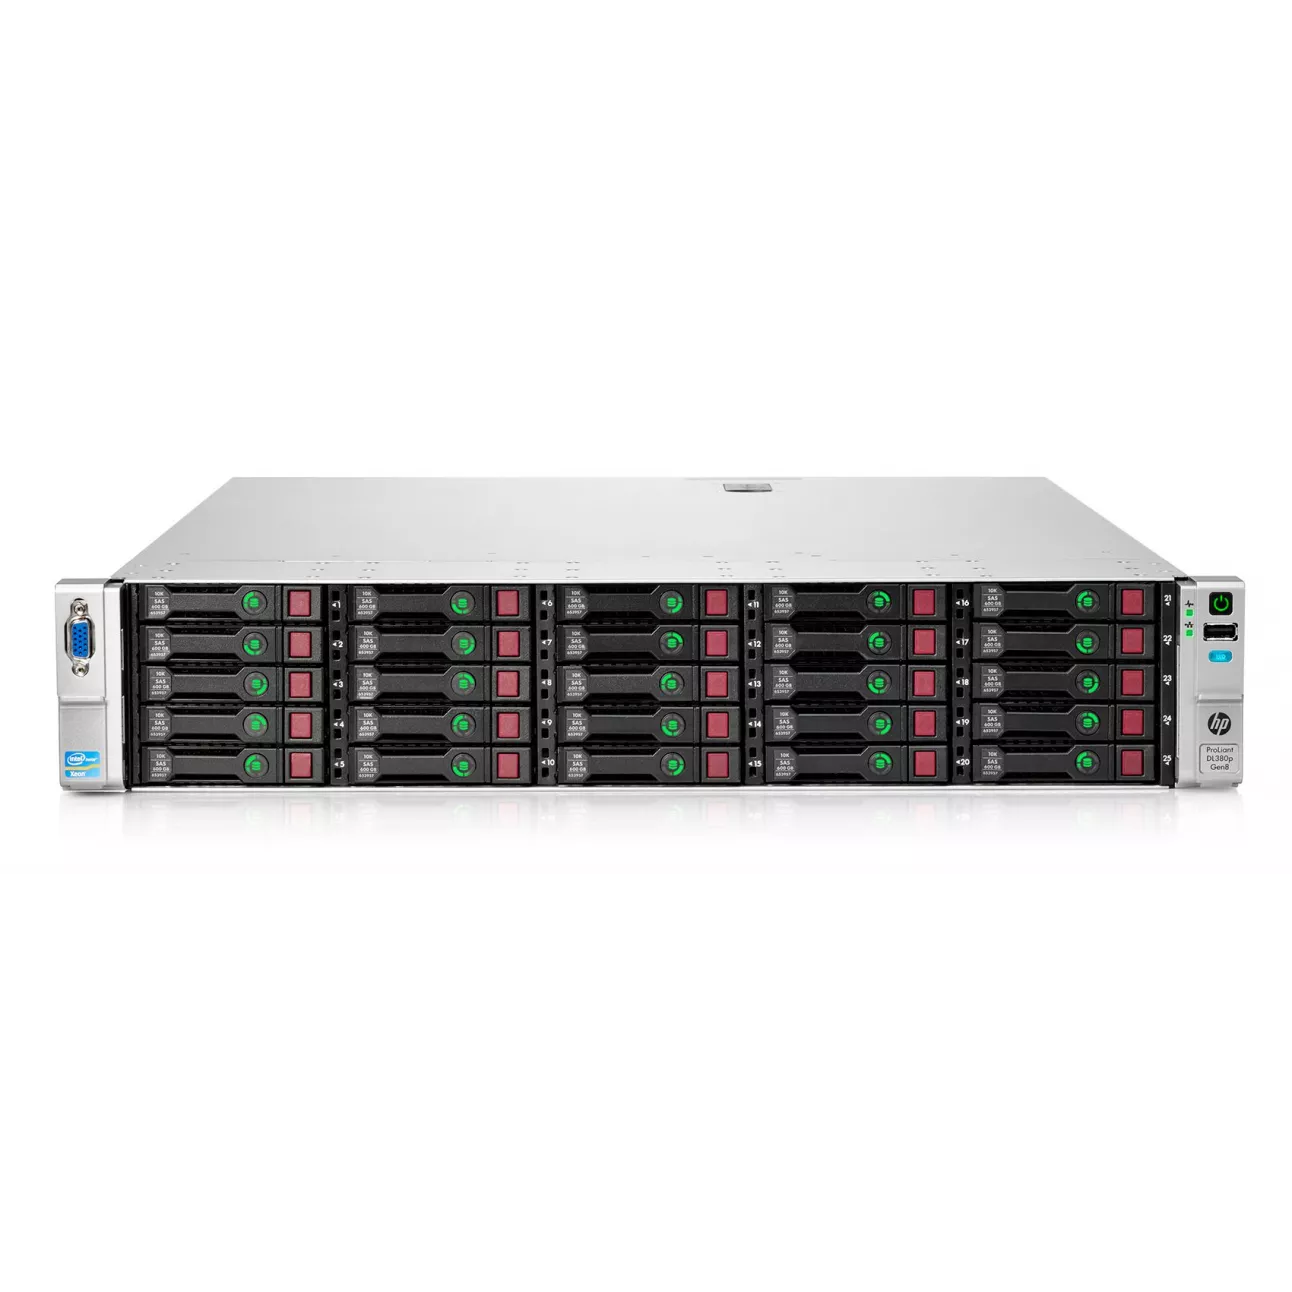 Сервер HP Proliant DL380p Gen8, 2 процессора Intel Xeon 6C E5-2640, 32GB DRAM, 25SFF, P420i/1GB FBWC